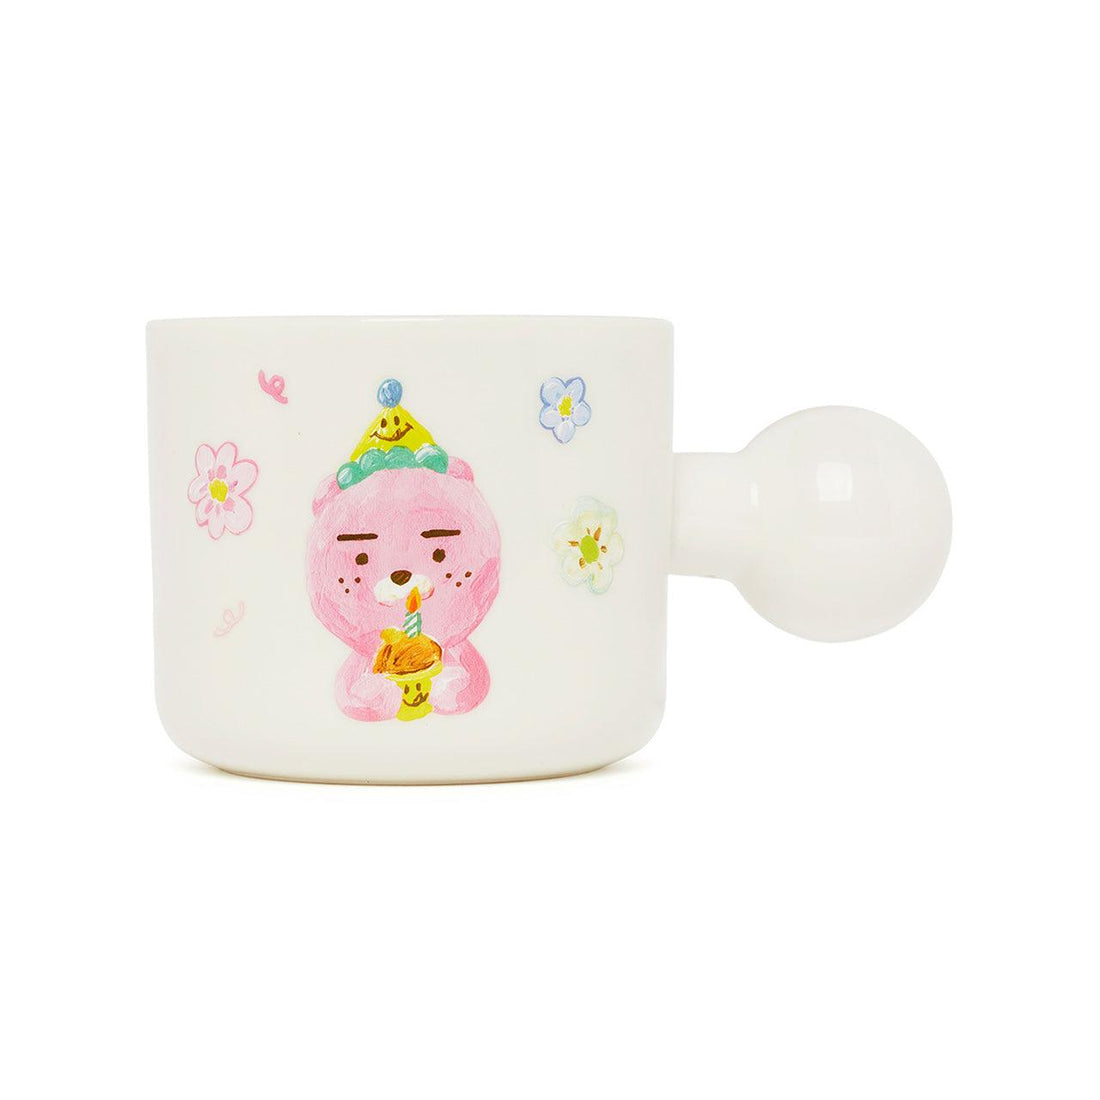 Kakao Friends x Cafe Knotted Ryan Mug Cup & Tray Set 馬克杯托盤套裝 - SOUL SIMPLE HK